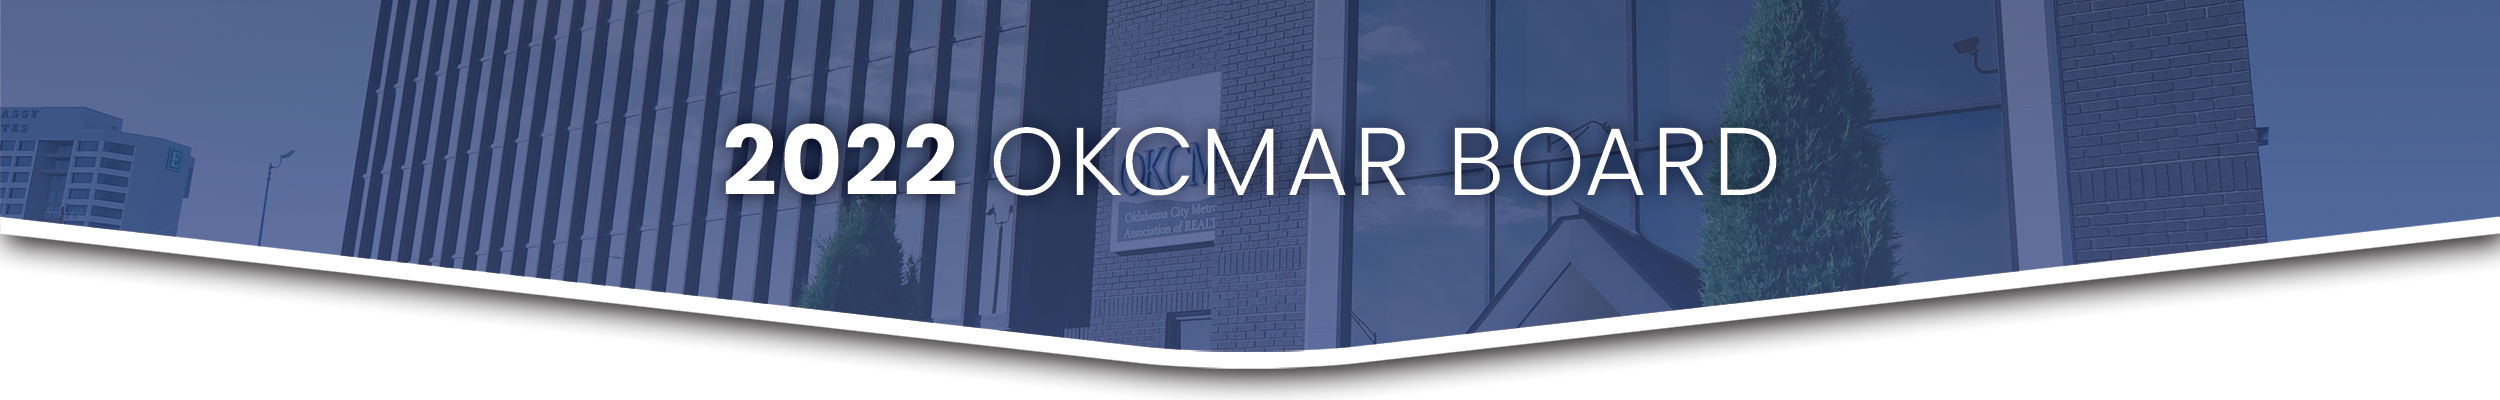 OKCMAR_Header_2022